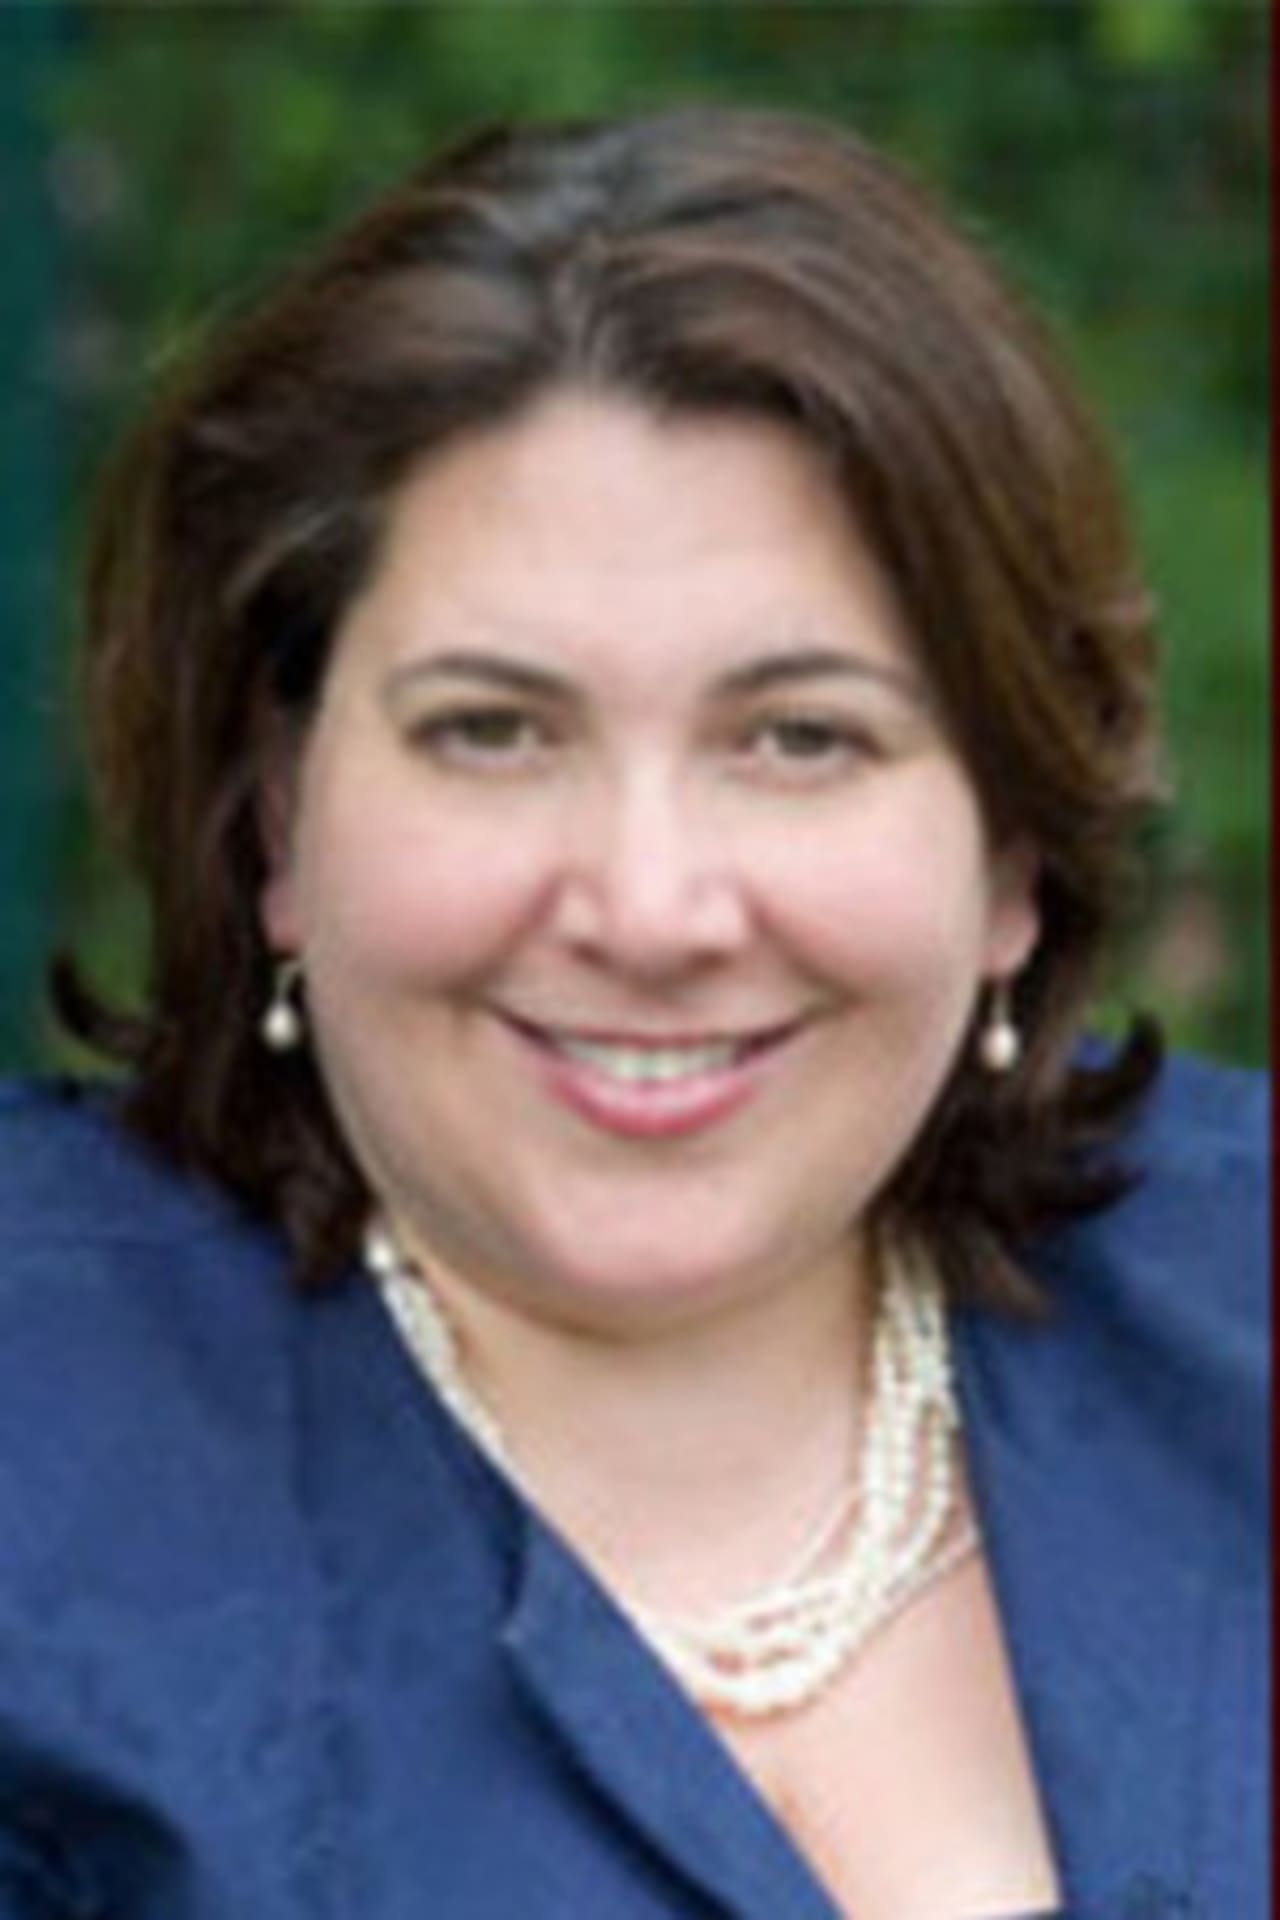 Westchester County Legislator Catherine Borgia